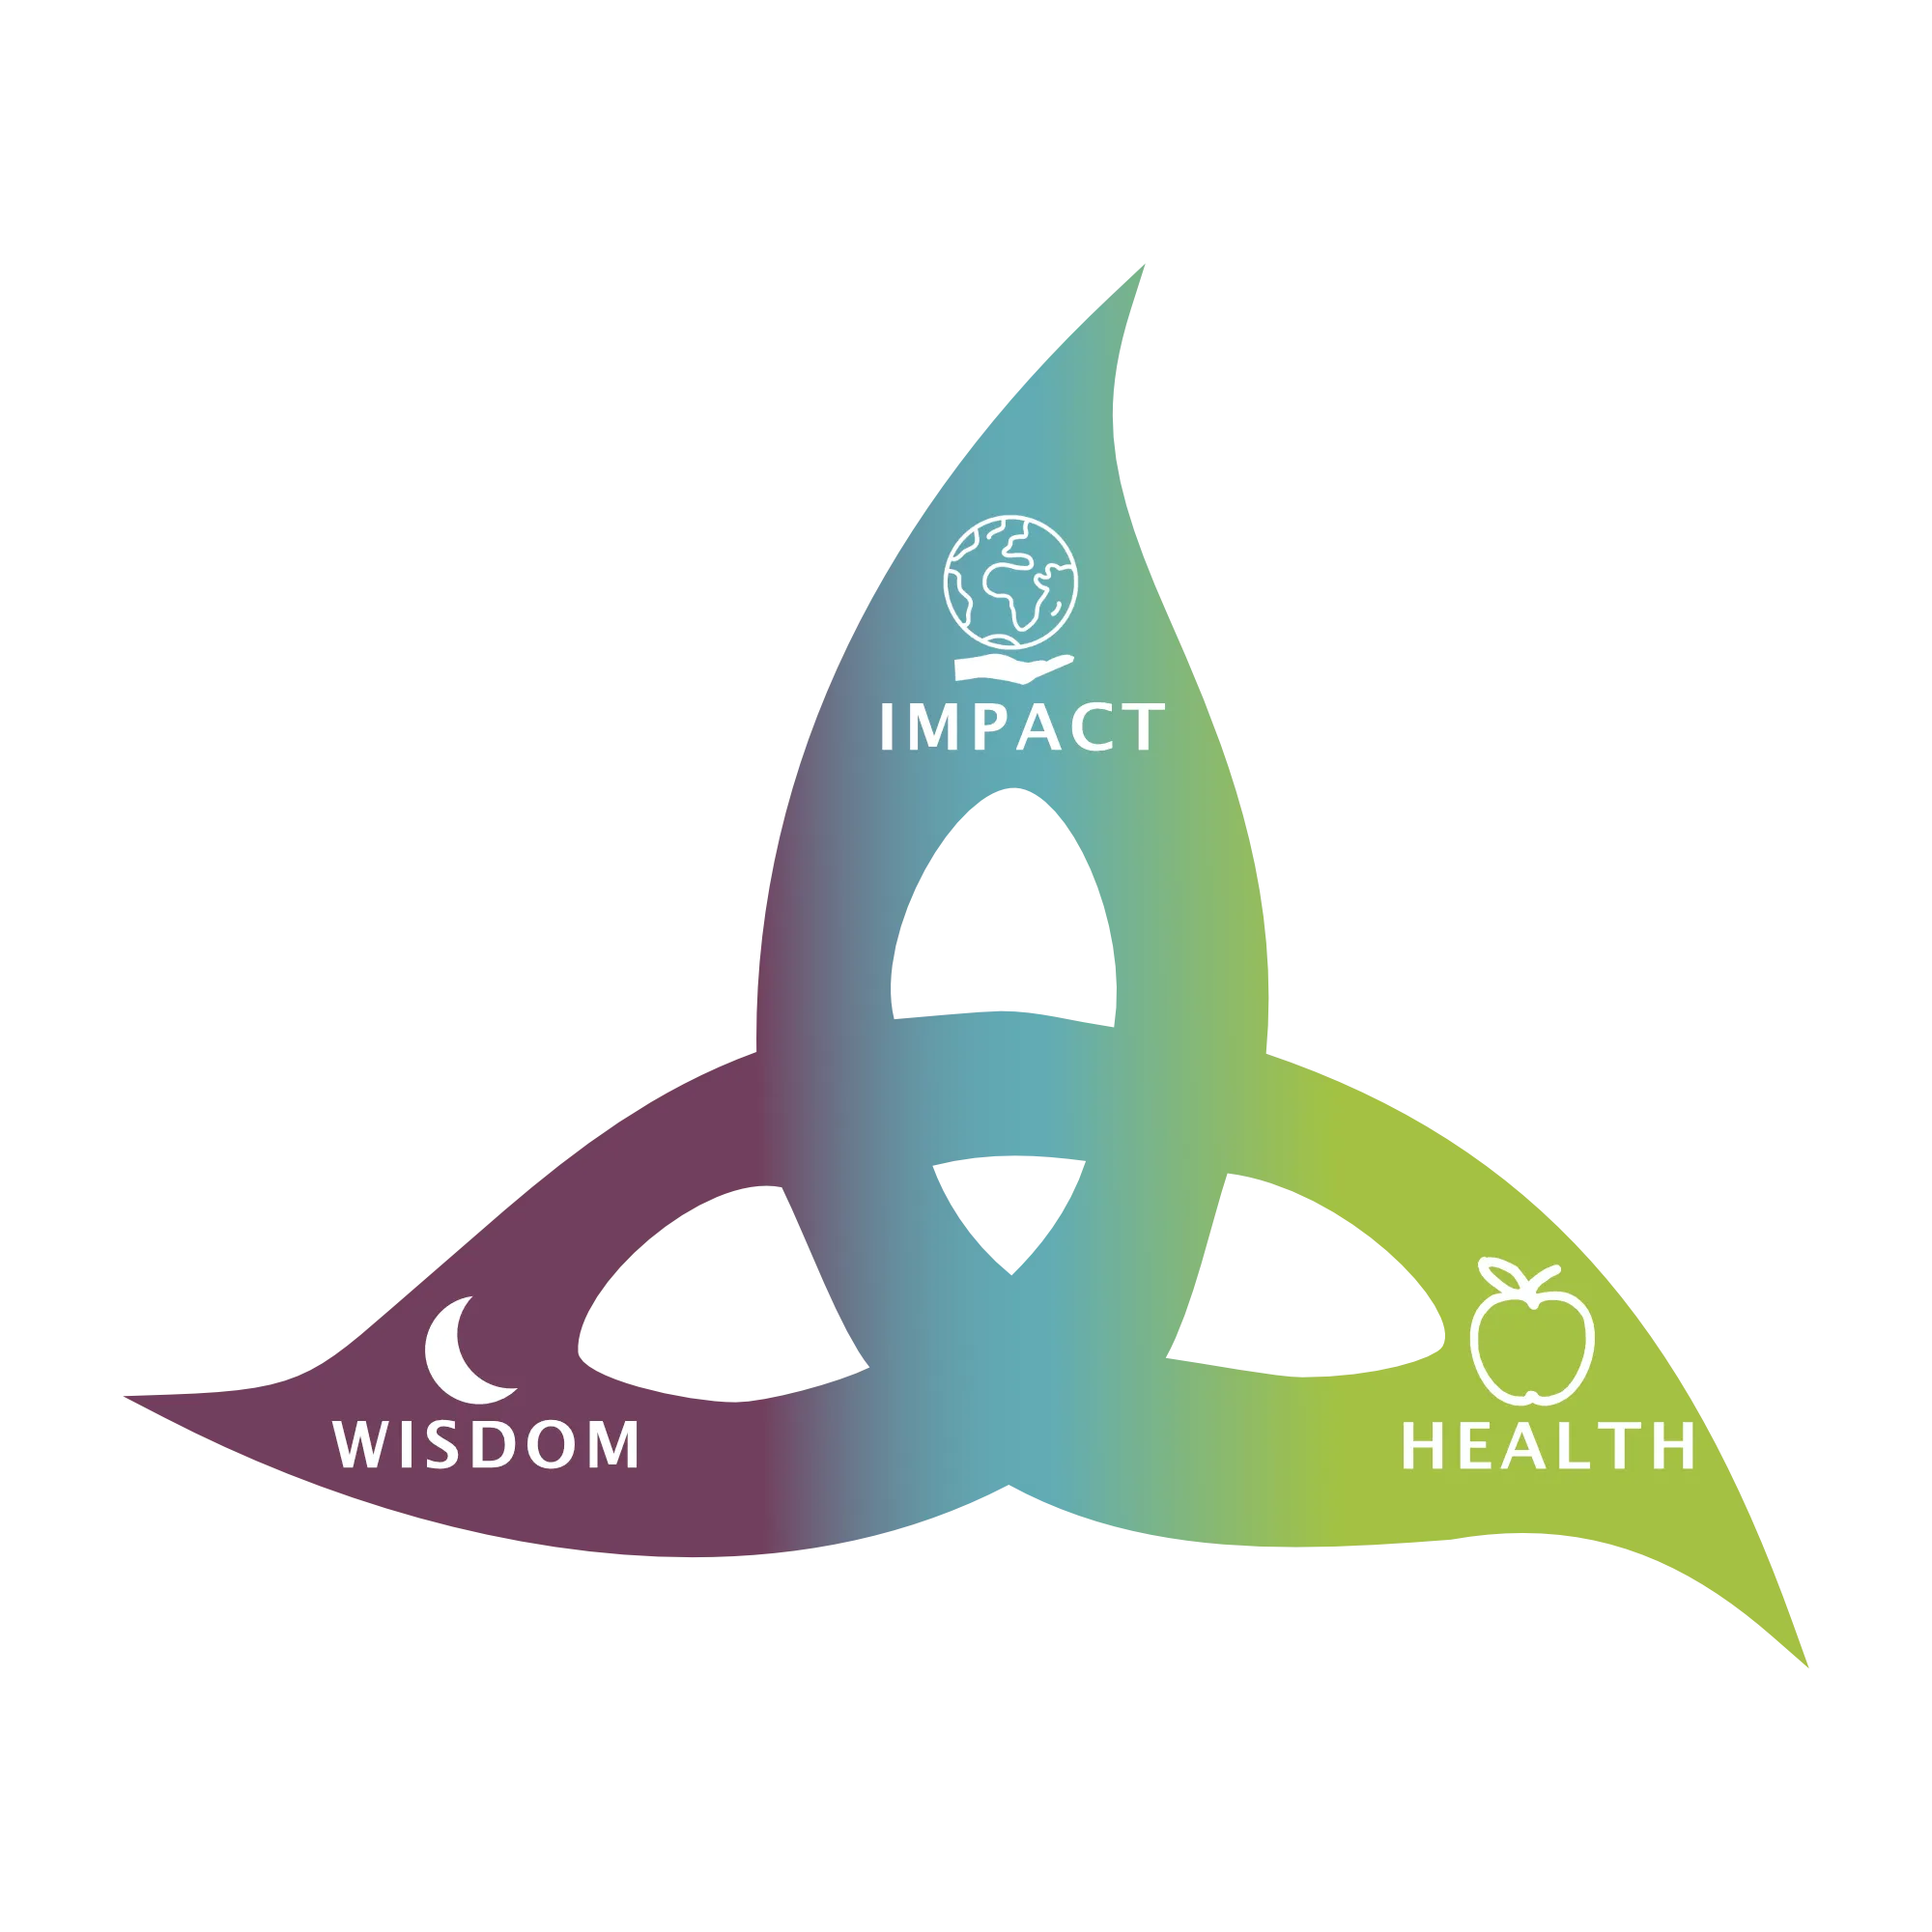 Health, Wisdom and Impact